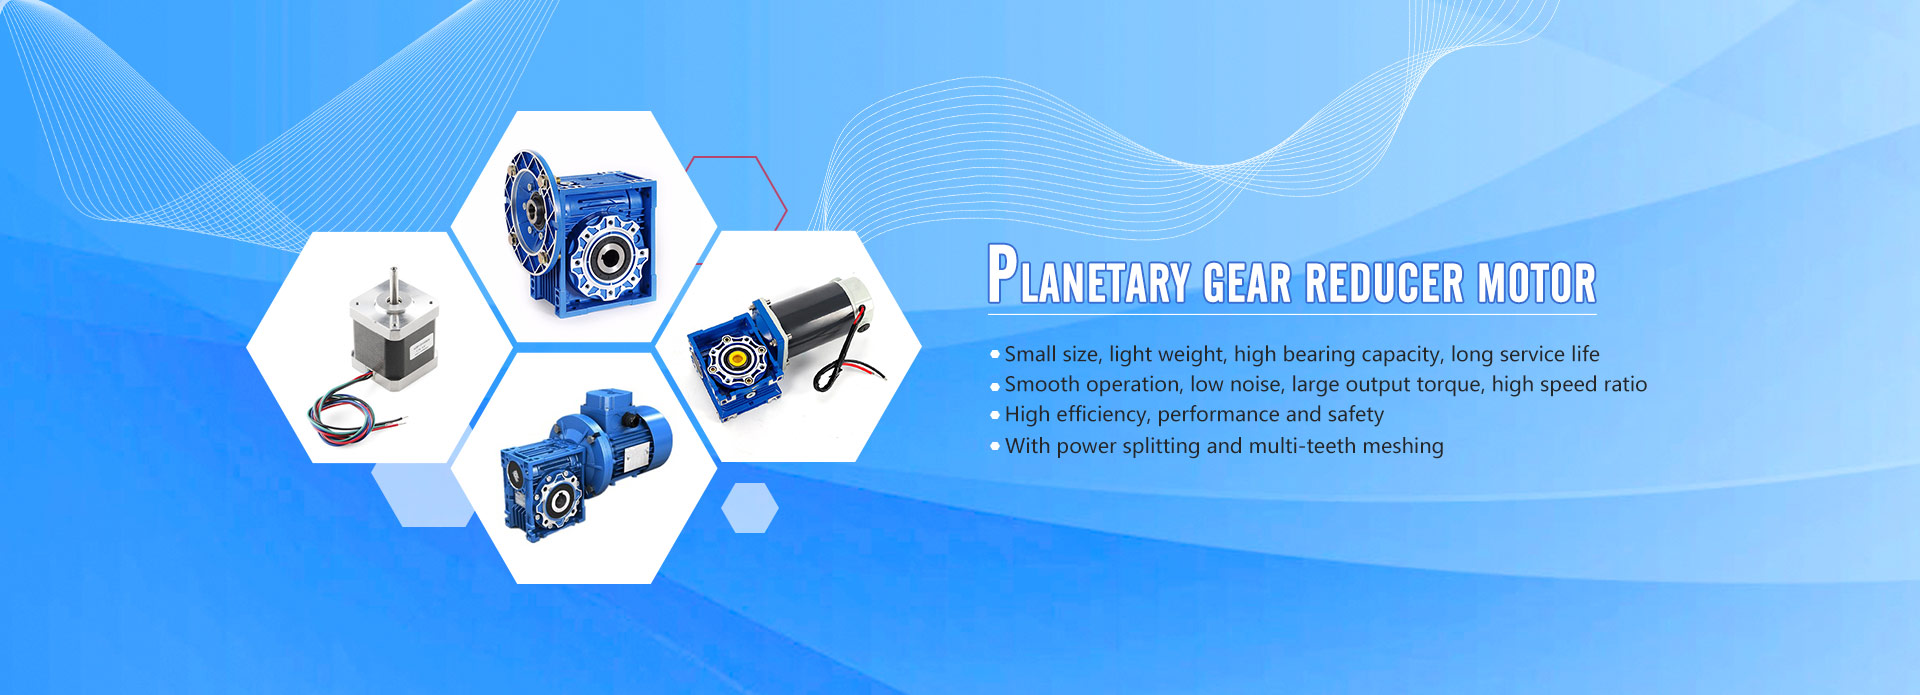 Planet Gear Reducer Motor